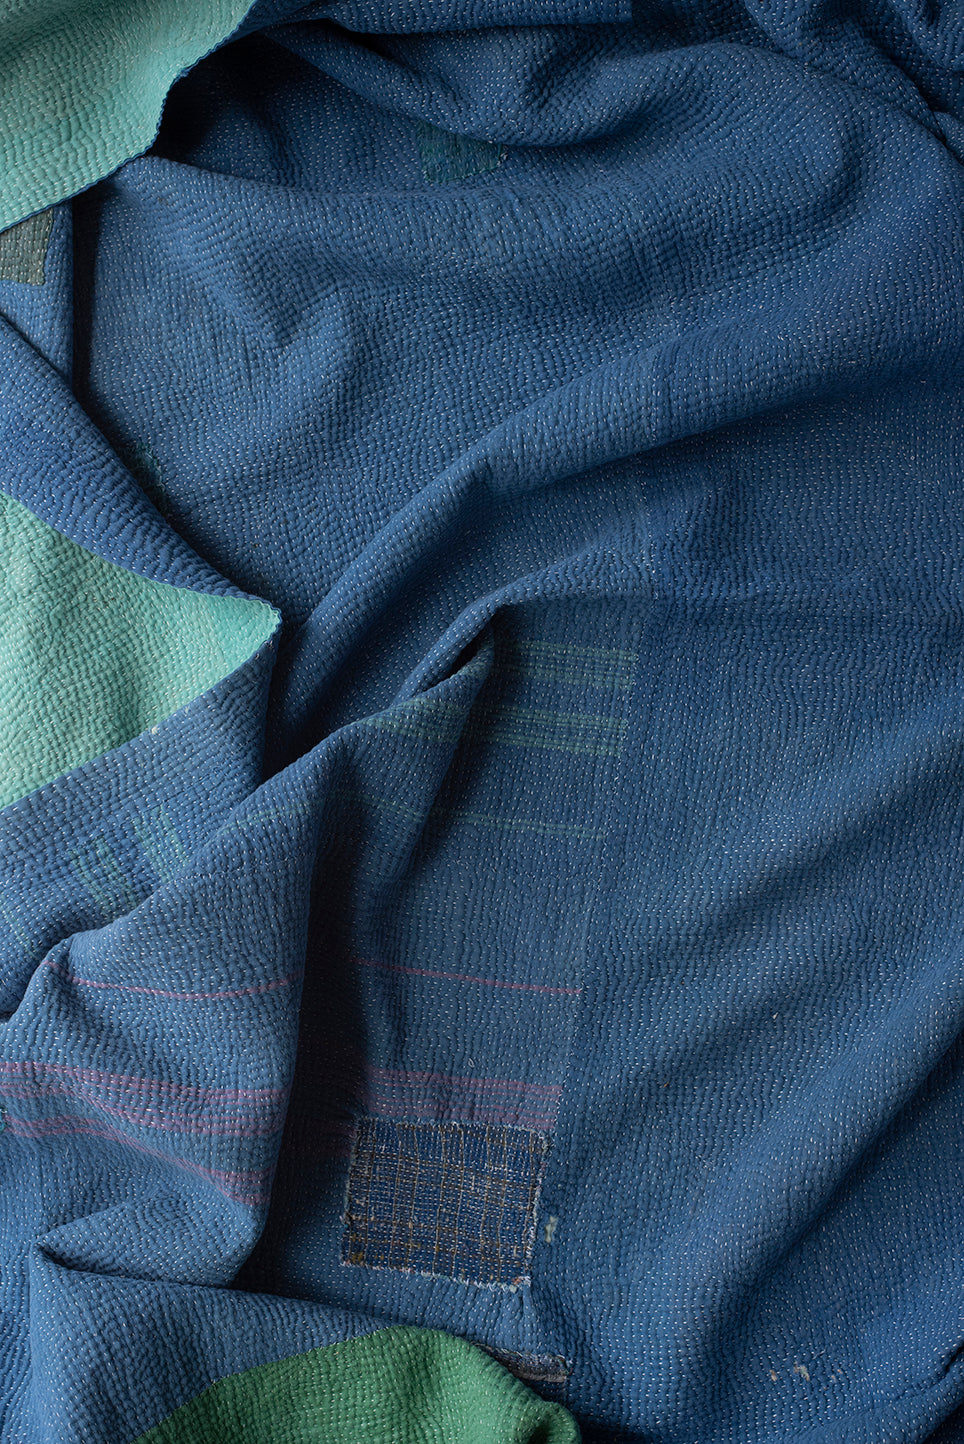 The Bluebell Quilt – Vintage Kantha Quilt